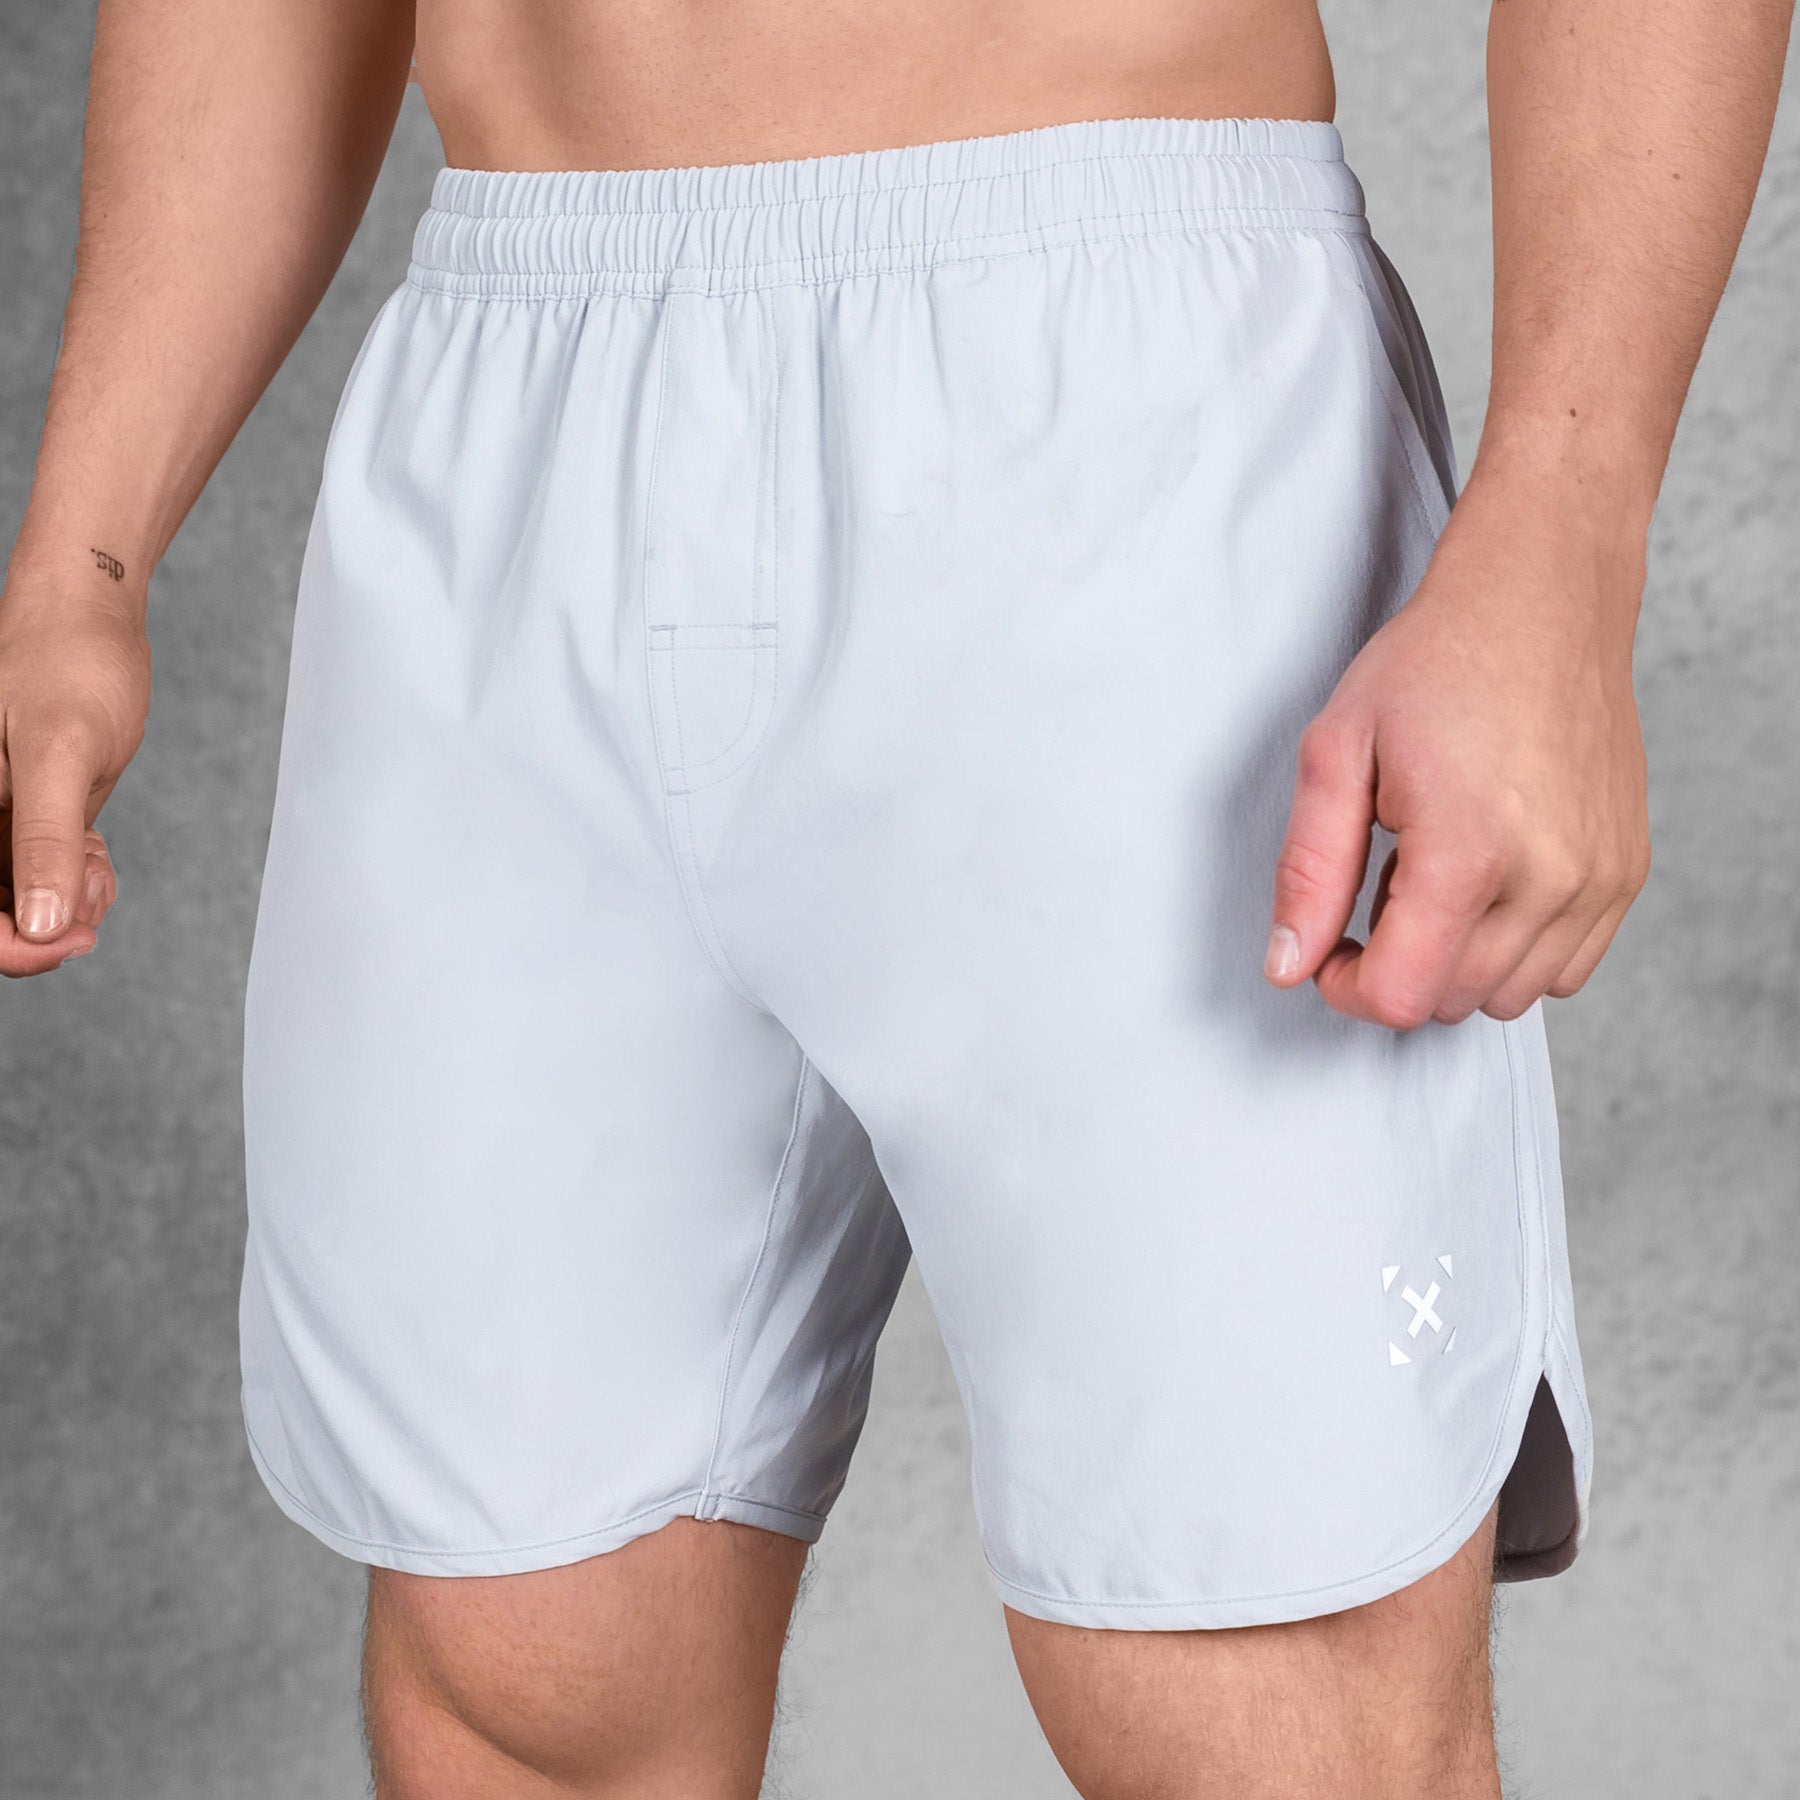 TWL - Men's Flex Shorts 3.0 - ICED GREY